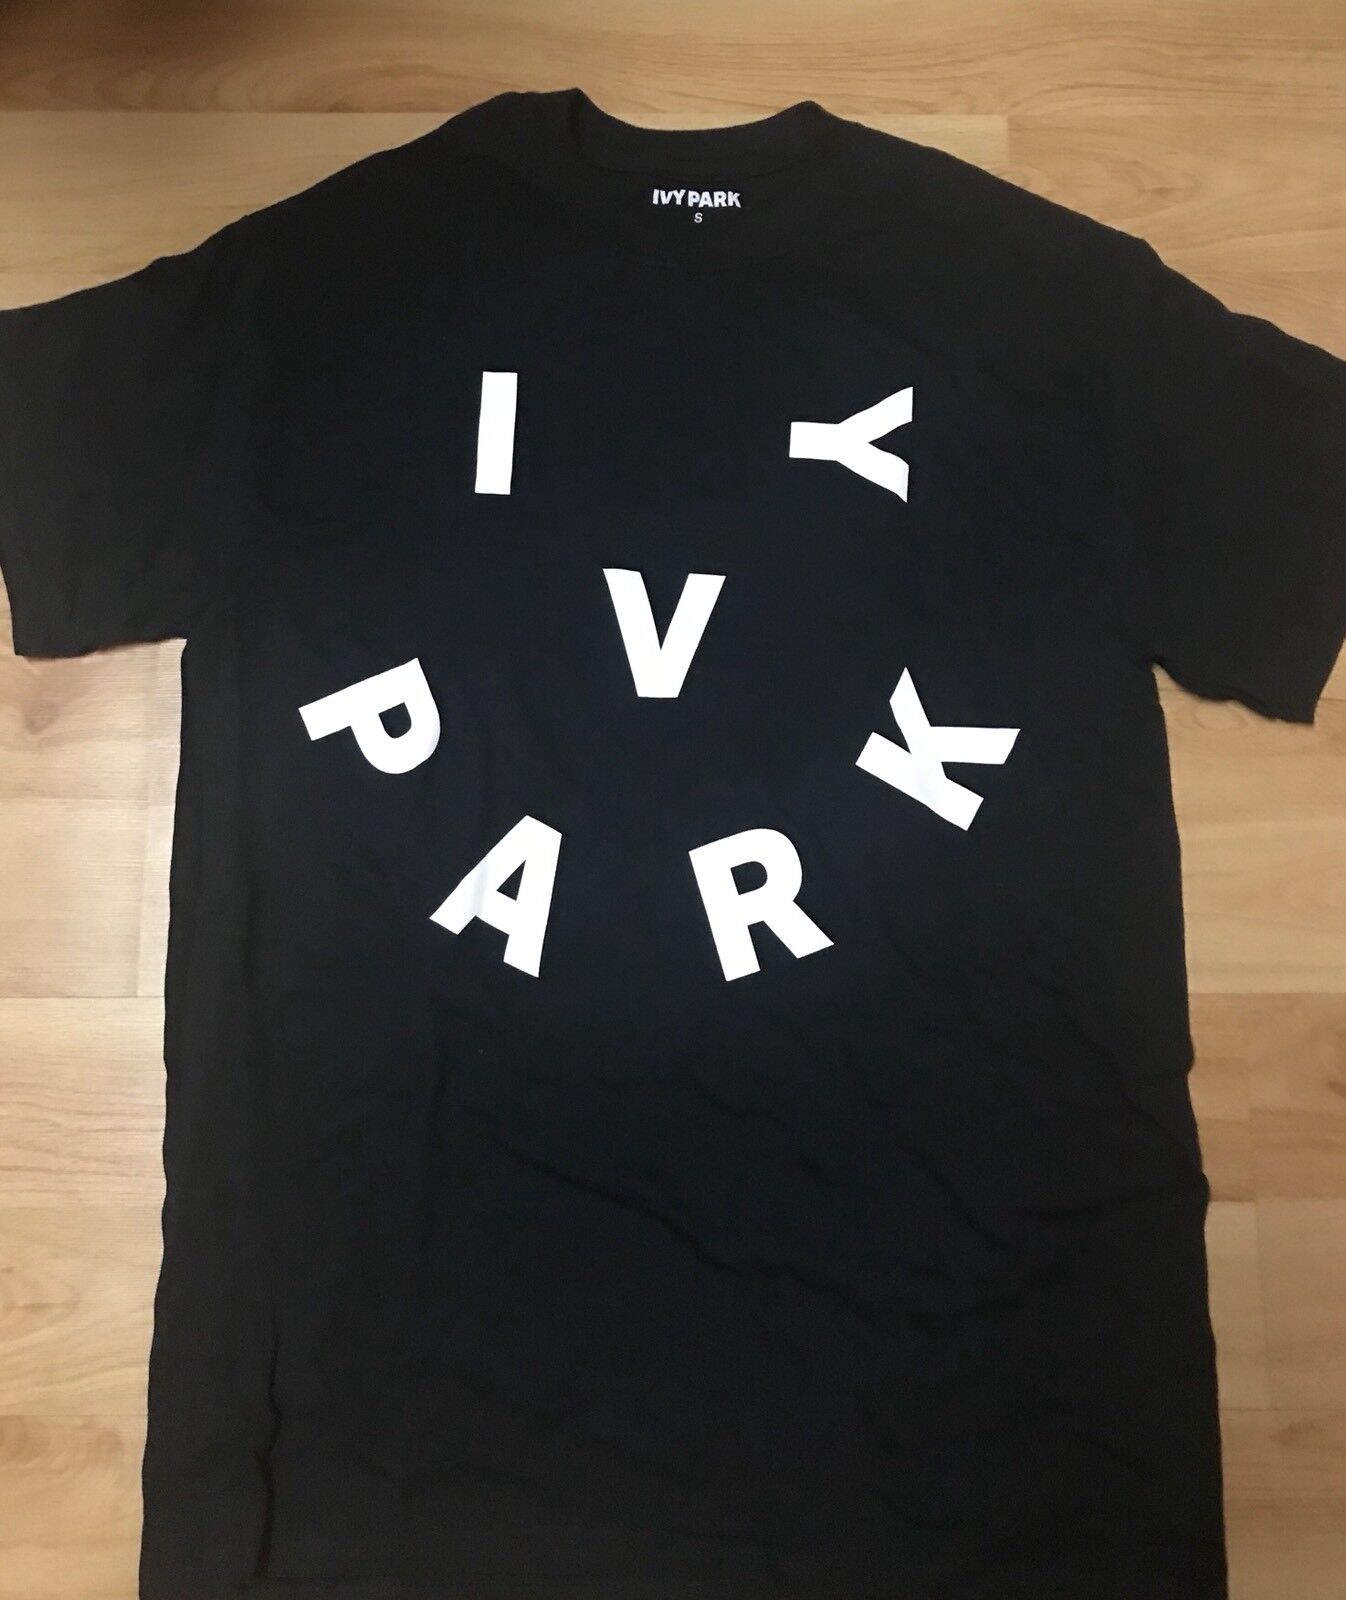 Spasm price BEYONCE OFFICIAL online shopping 2018 OTR II TOUR IVY THE PARK ON T-Shirt LI RUN